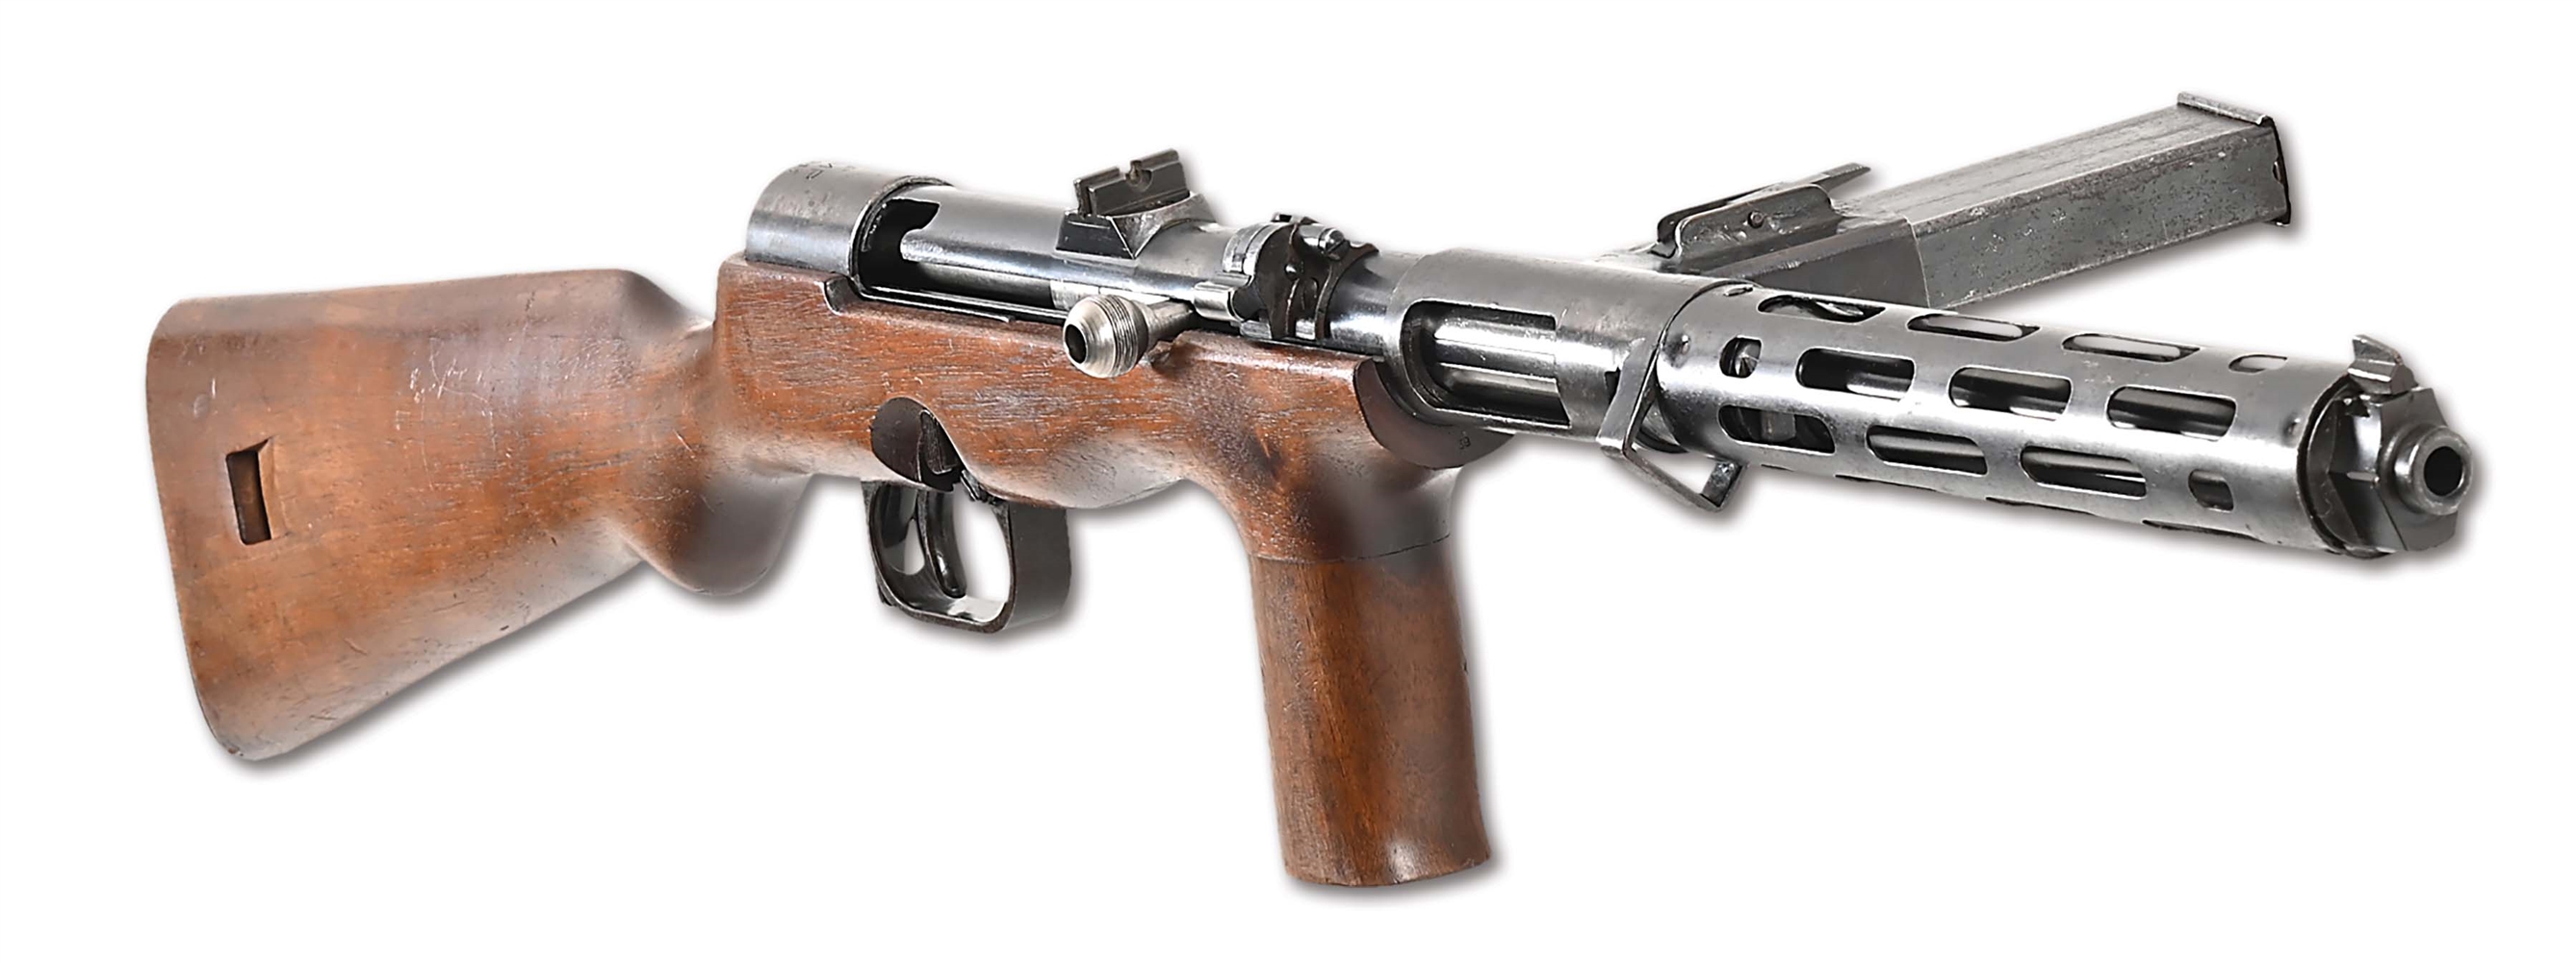 (N) HIGH CONDITION ORIGINAL GERMAN WWII ERMA EMP MACHINE GUN (CURIO AND RELIC).